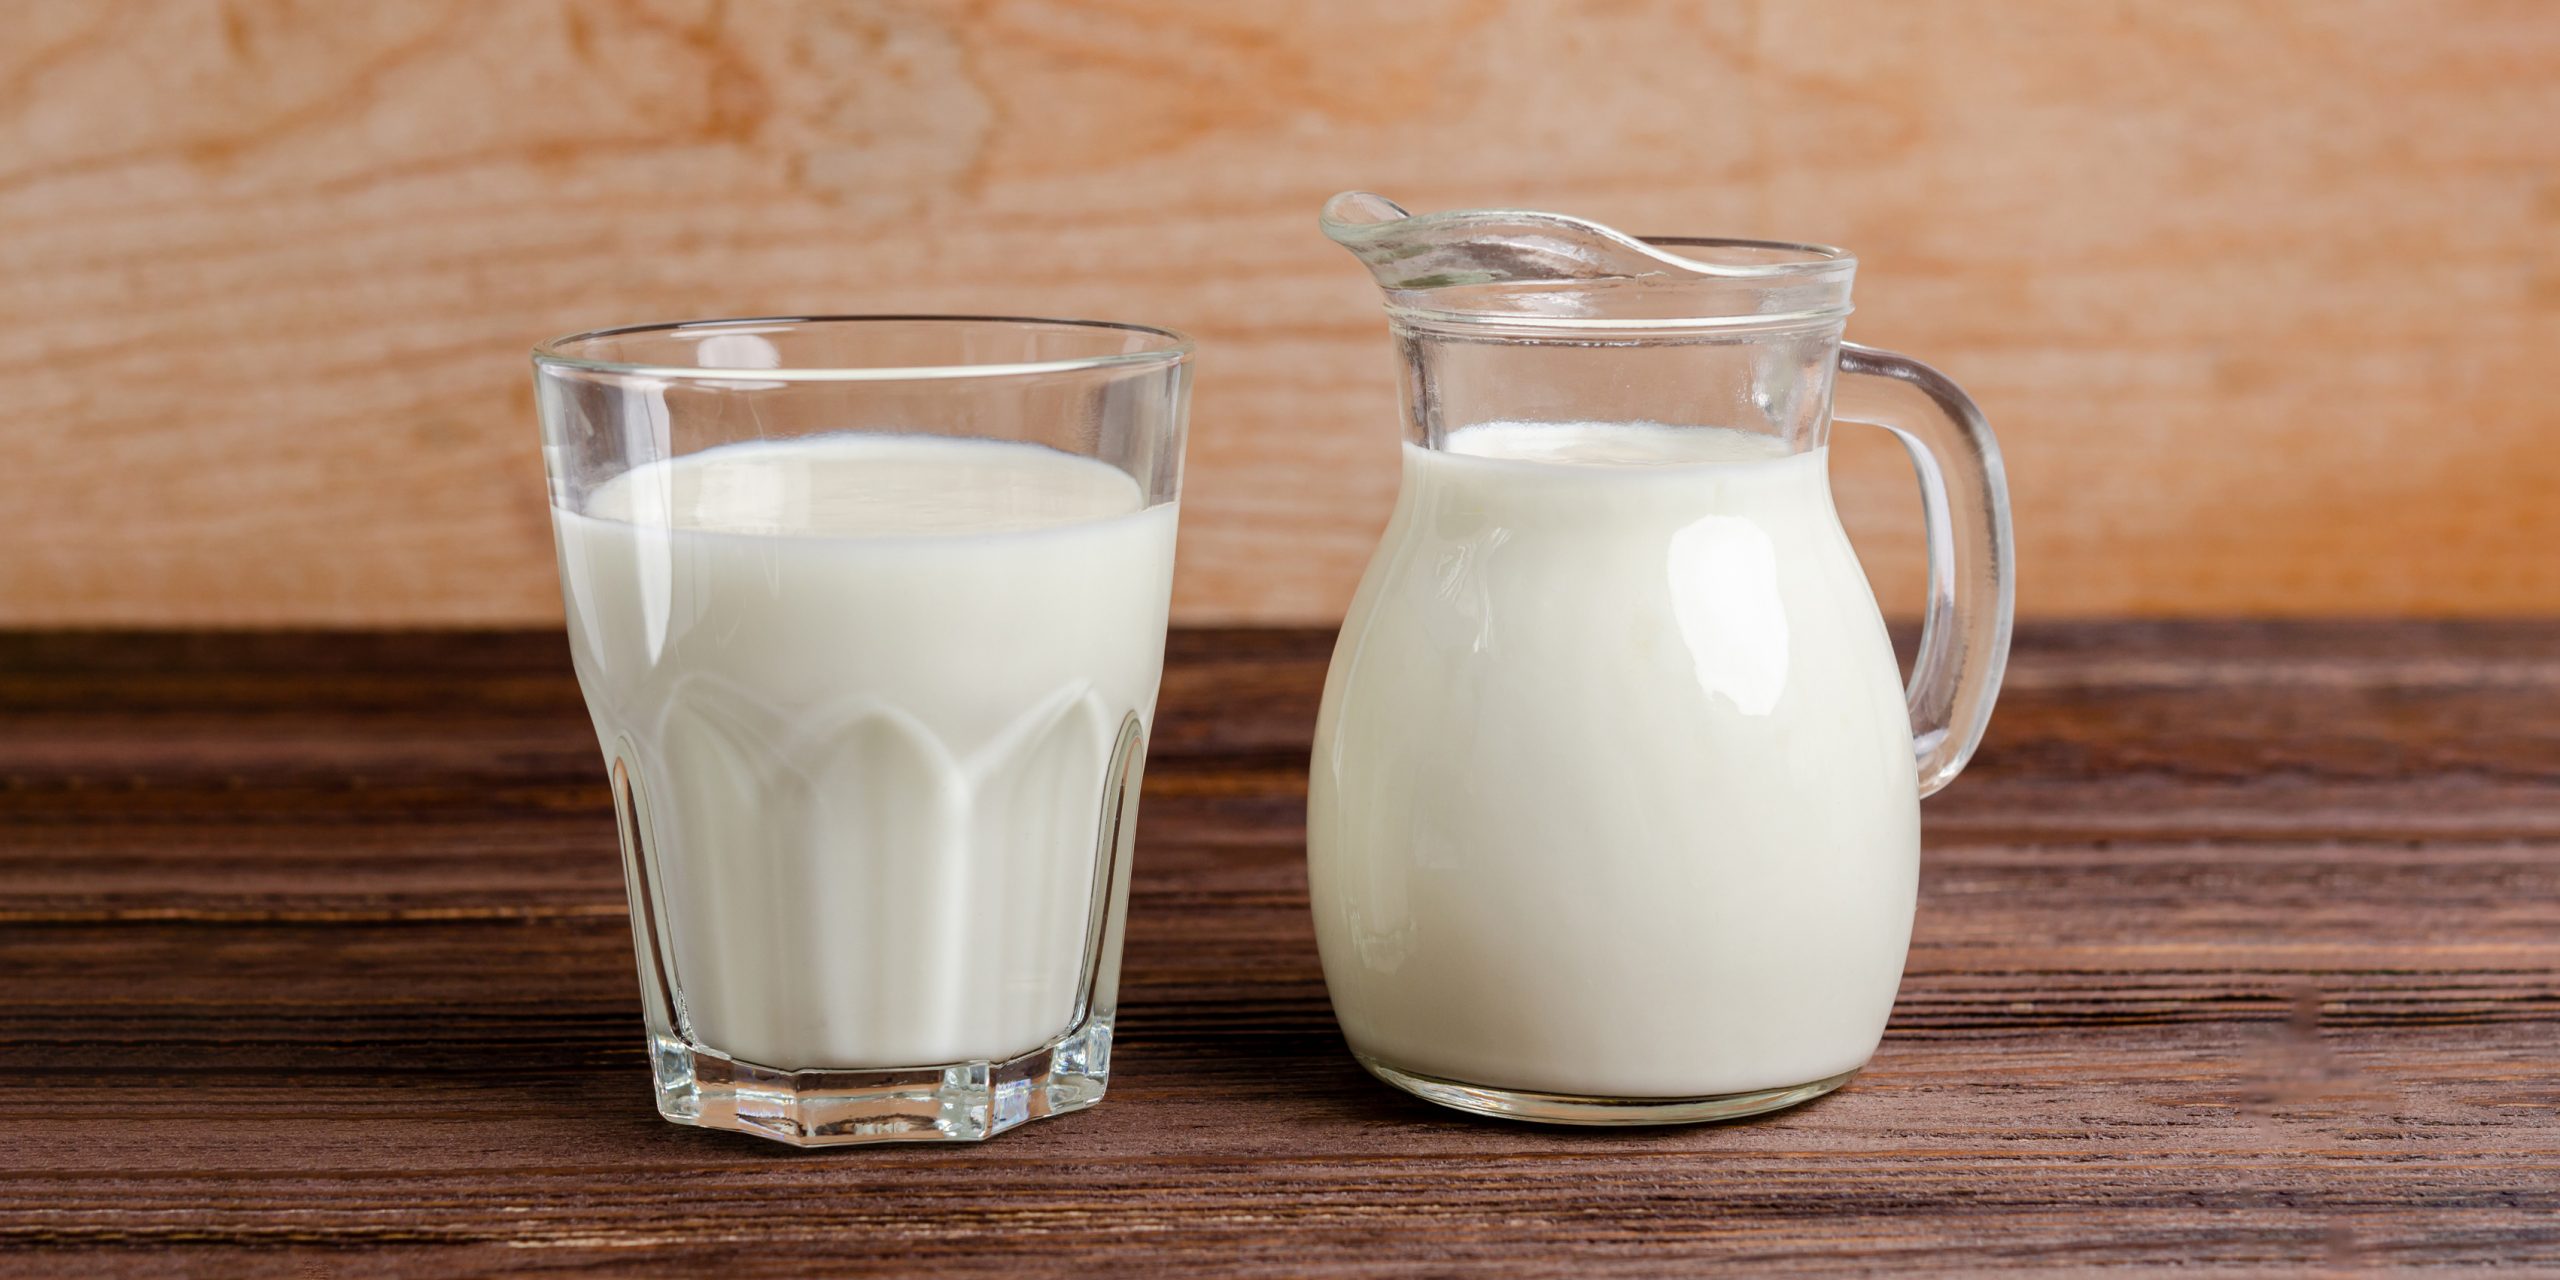 Milk Good For Diabetes